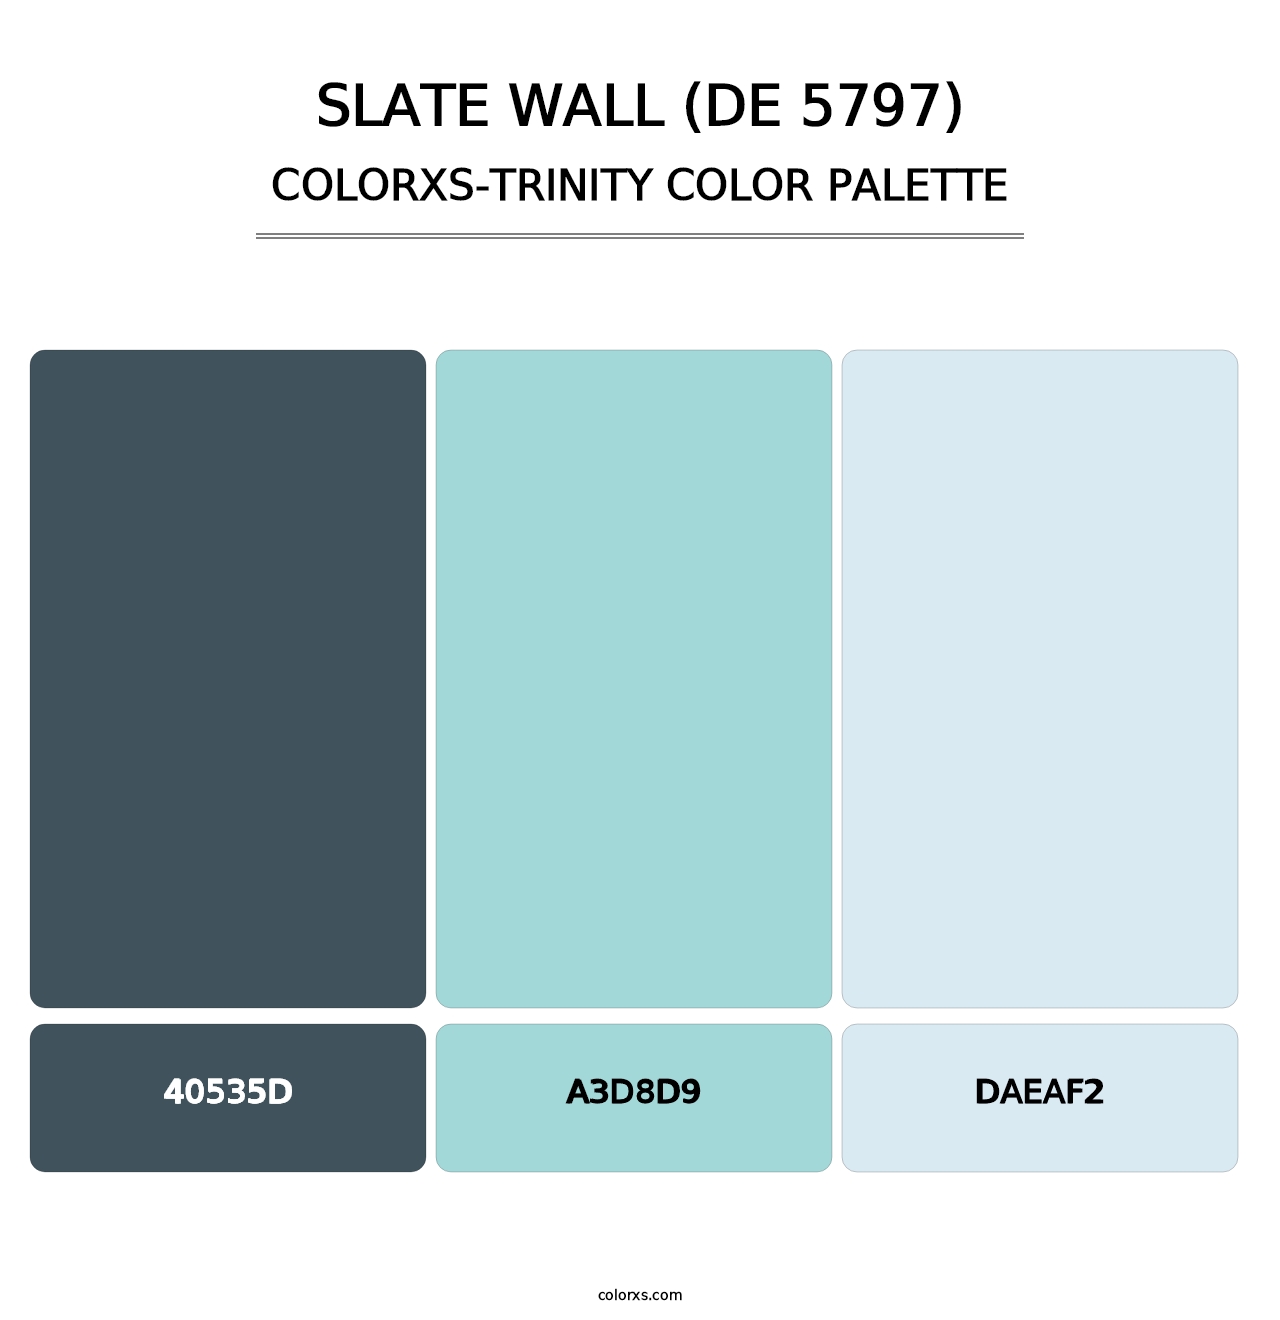 Slate Wall (DE 5797) - Colorxs Trinity Palette